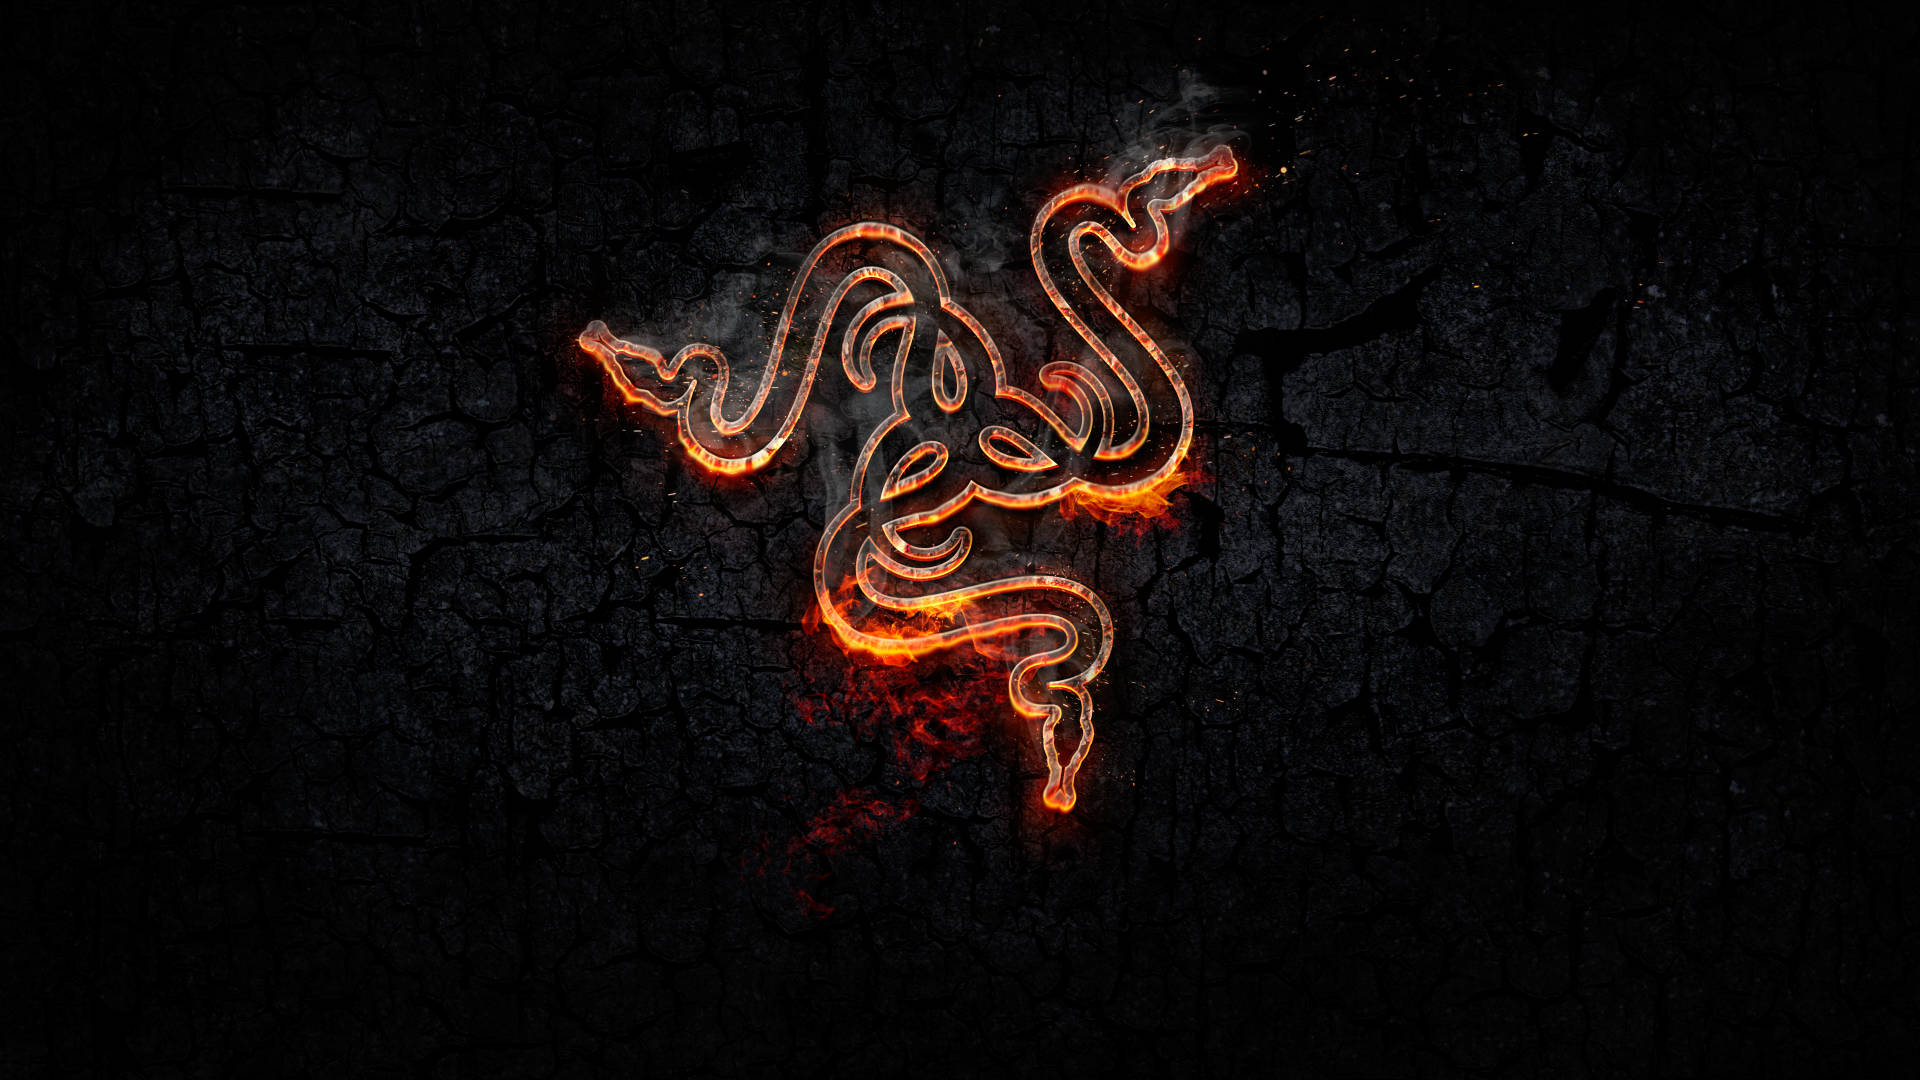 Razer Pc Logo With Fire Design Background